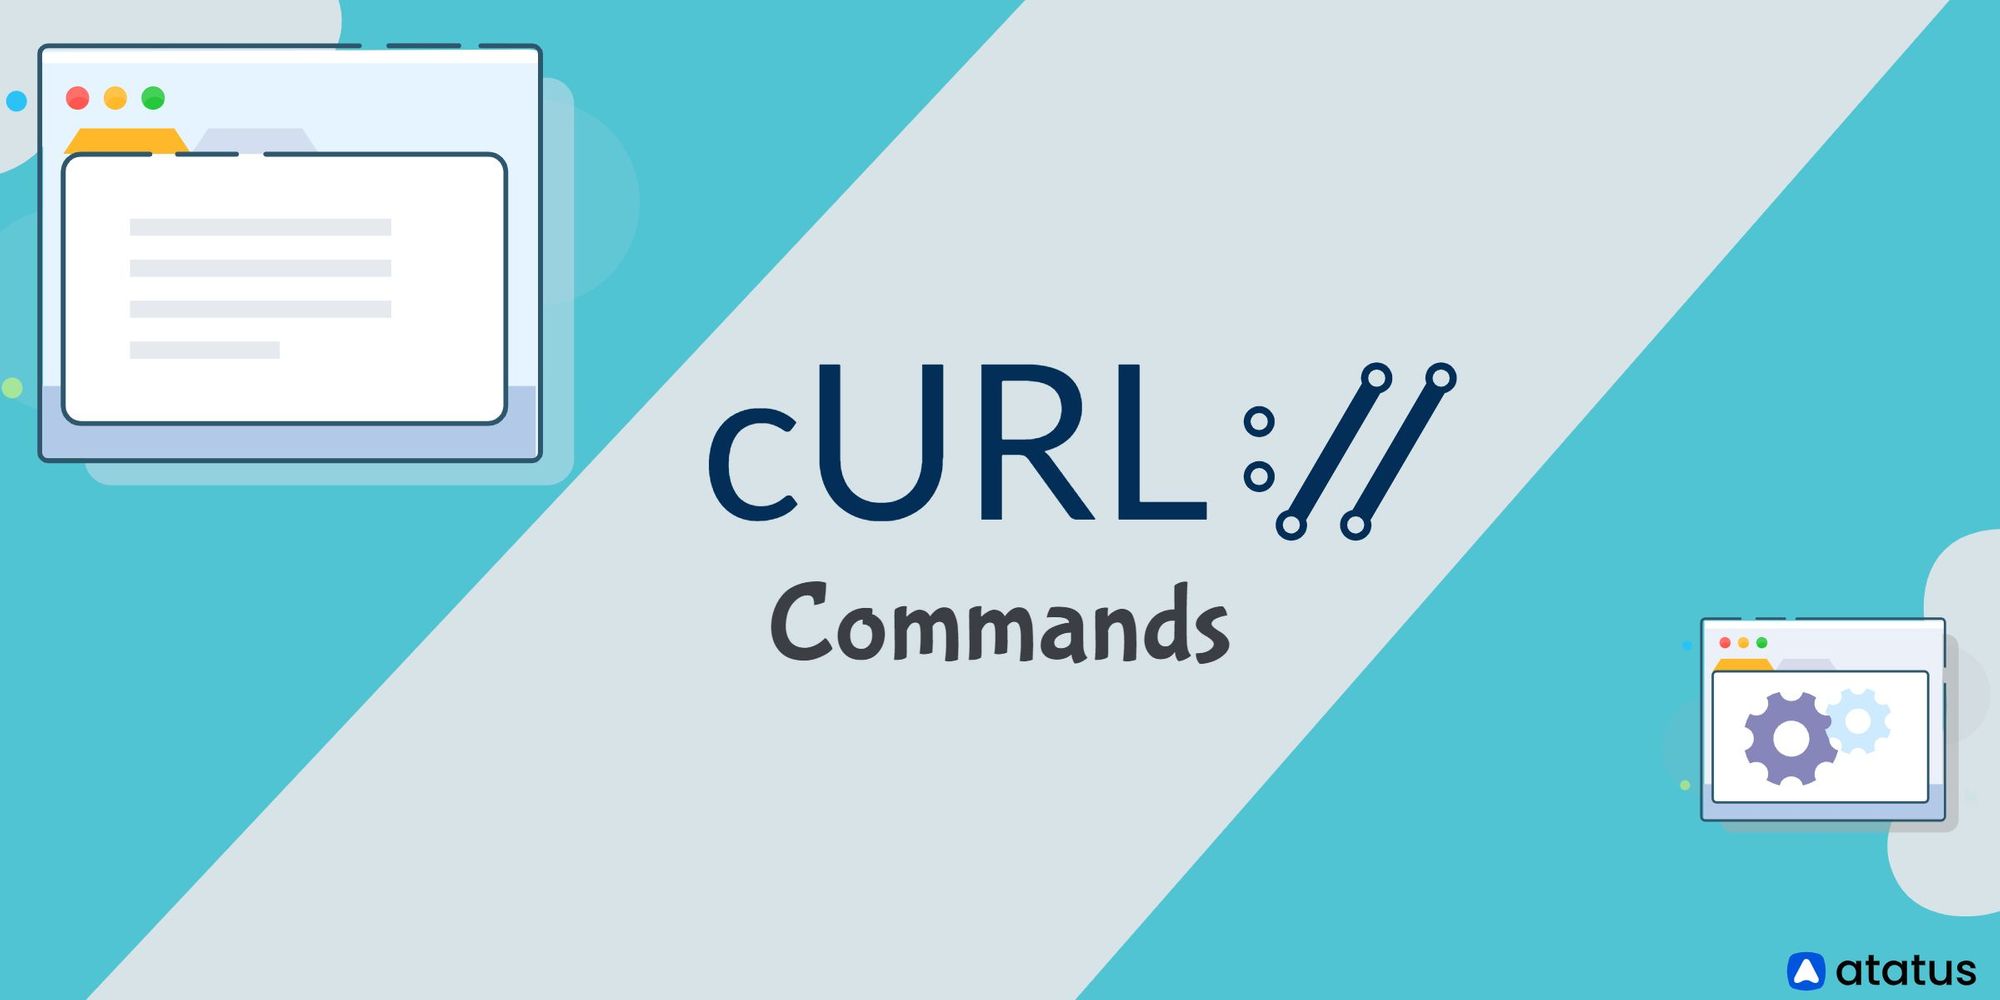 Curl download https. Curl get request example.